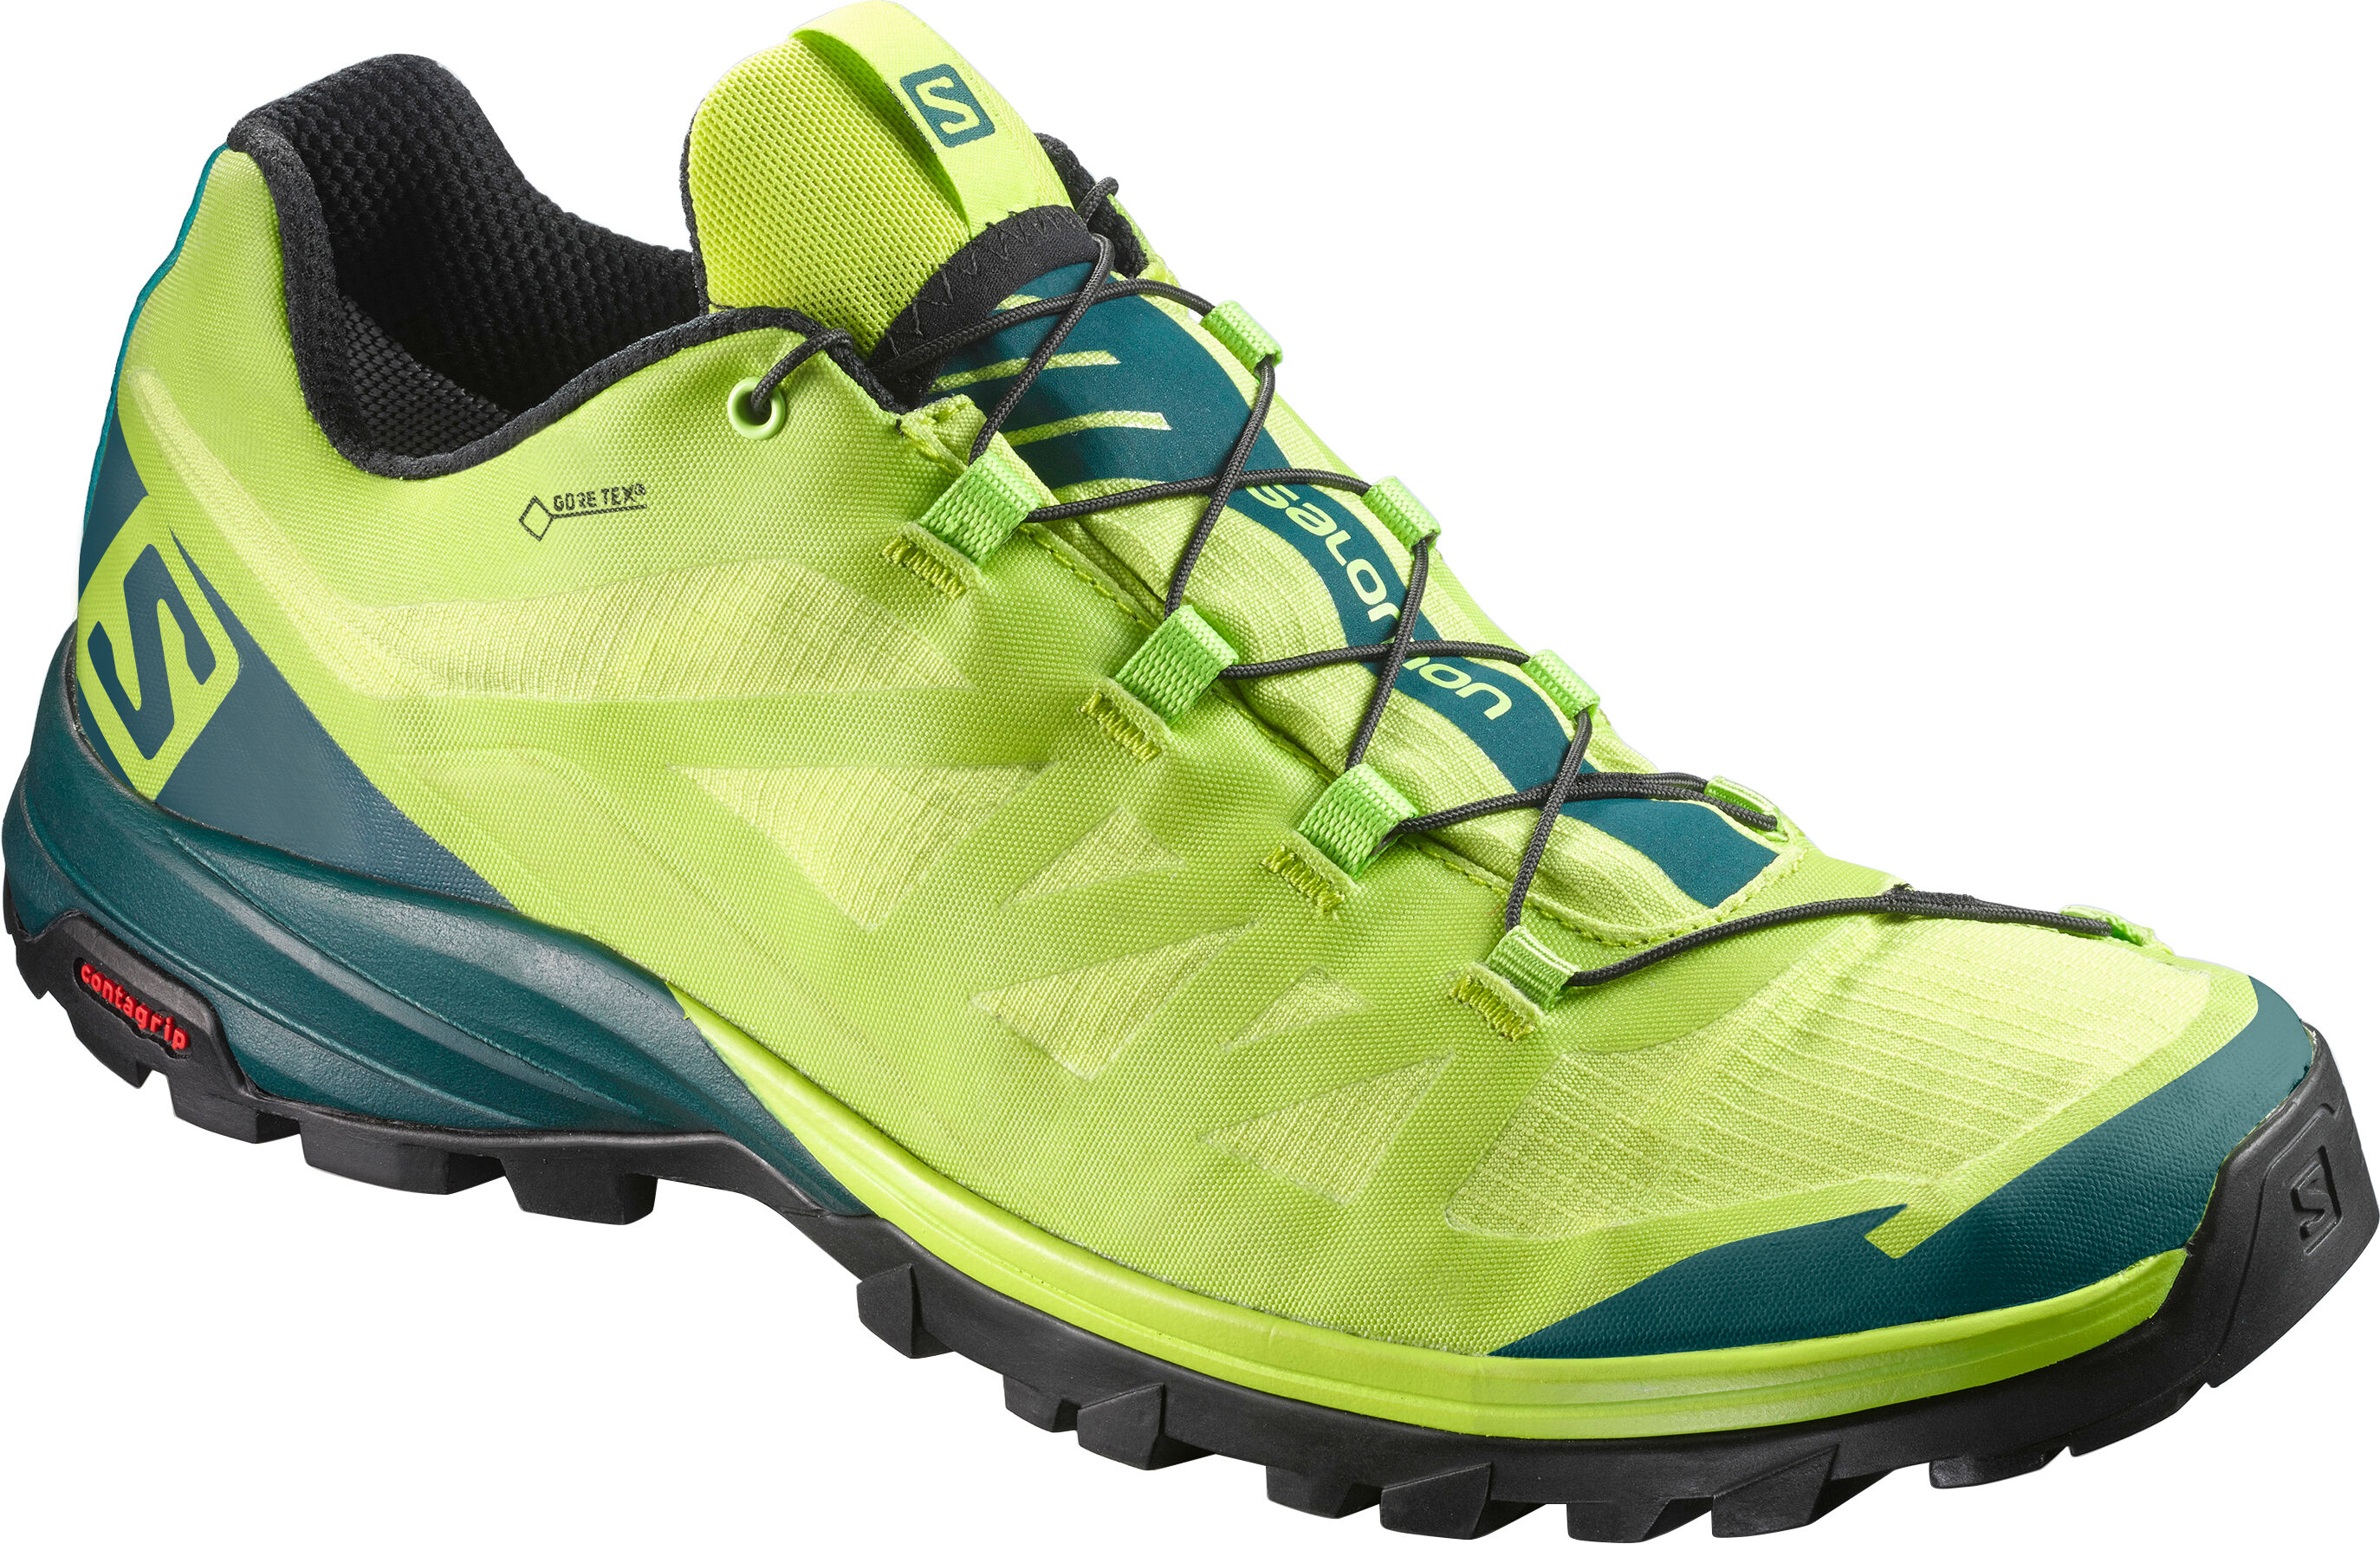 Salomon - Outpath GTX® - Walking Boots - Men's